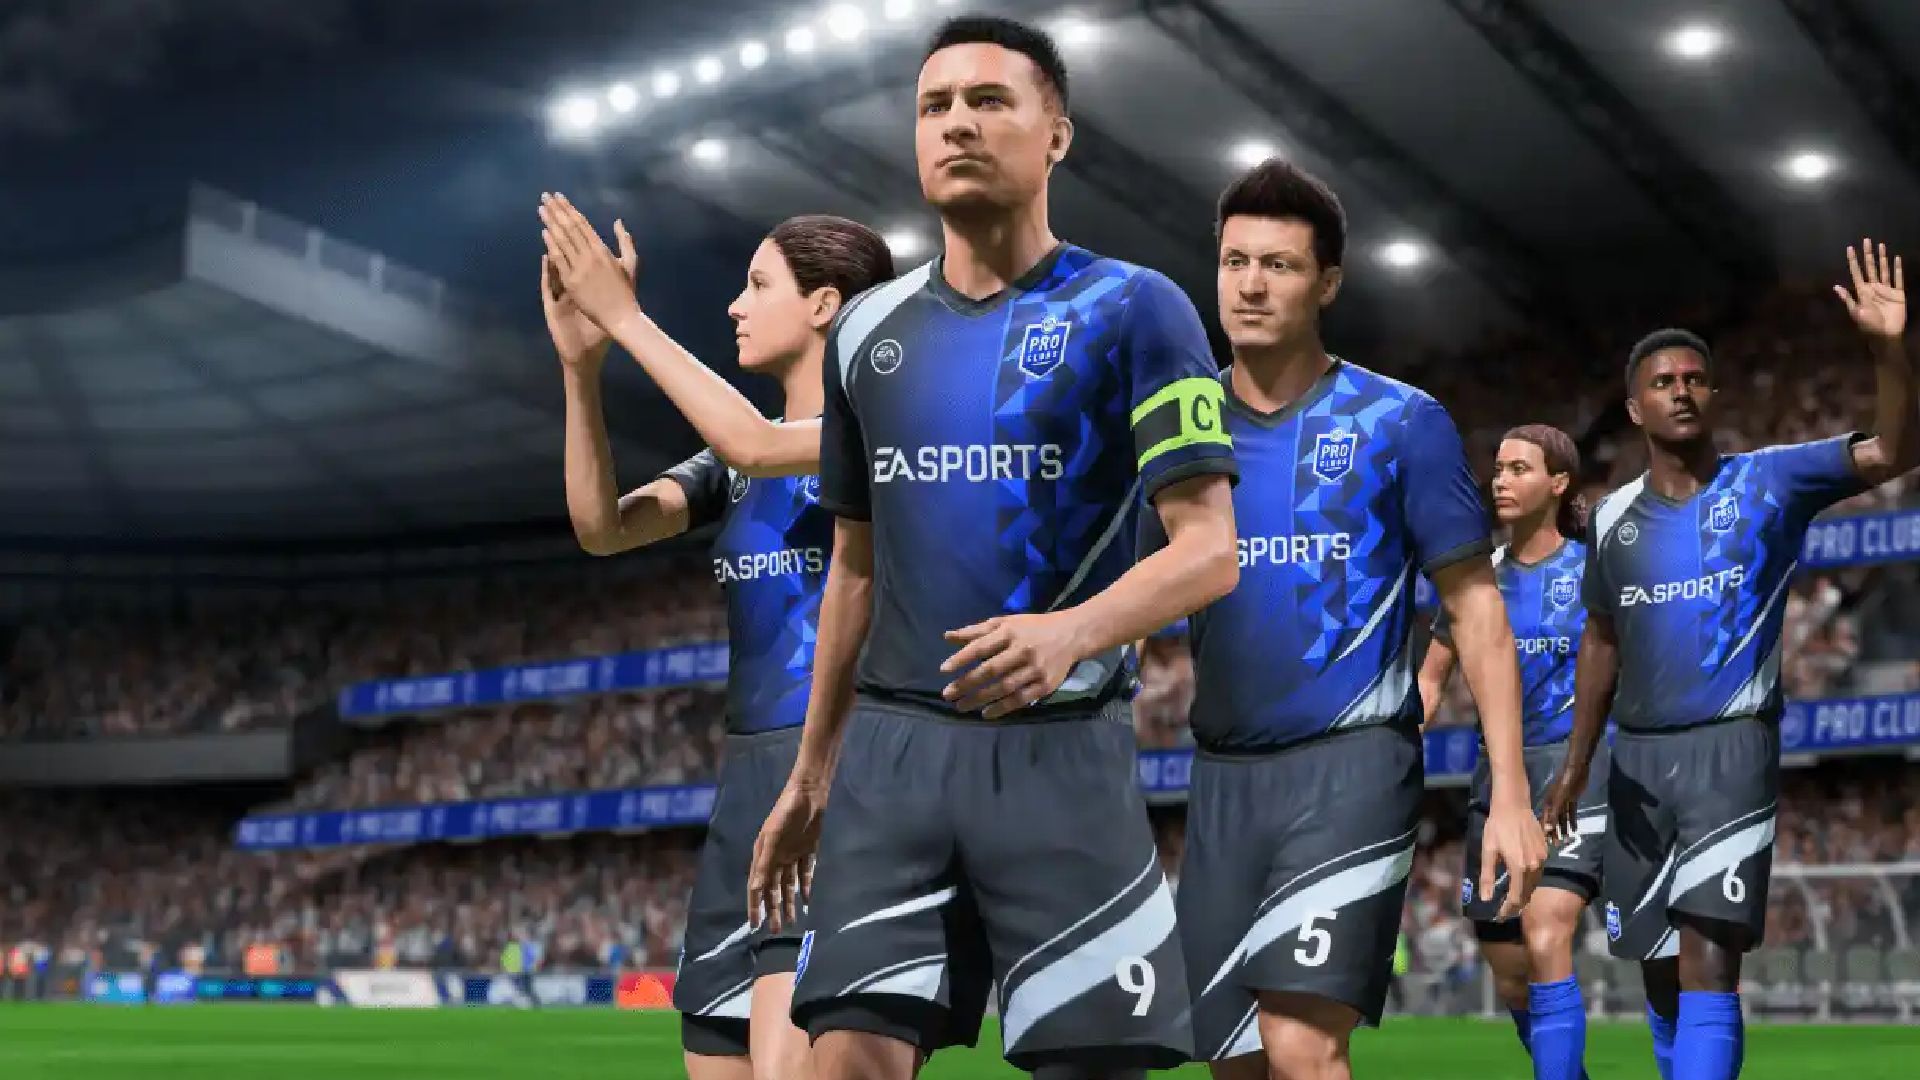 FIFA 23 chega ao Game Pass e EA Play na próxima semana